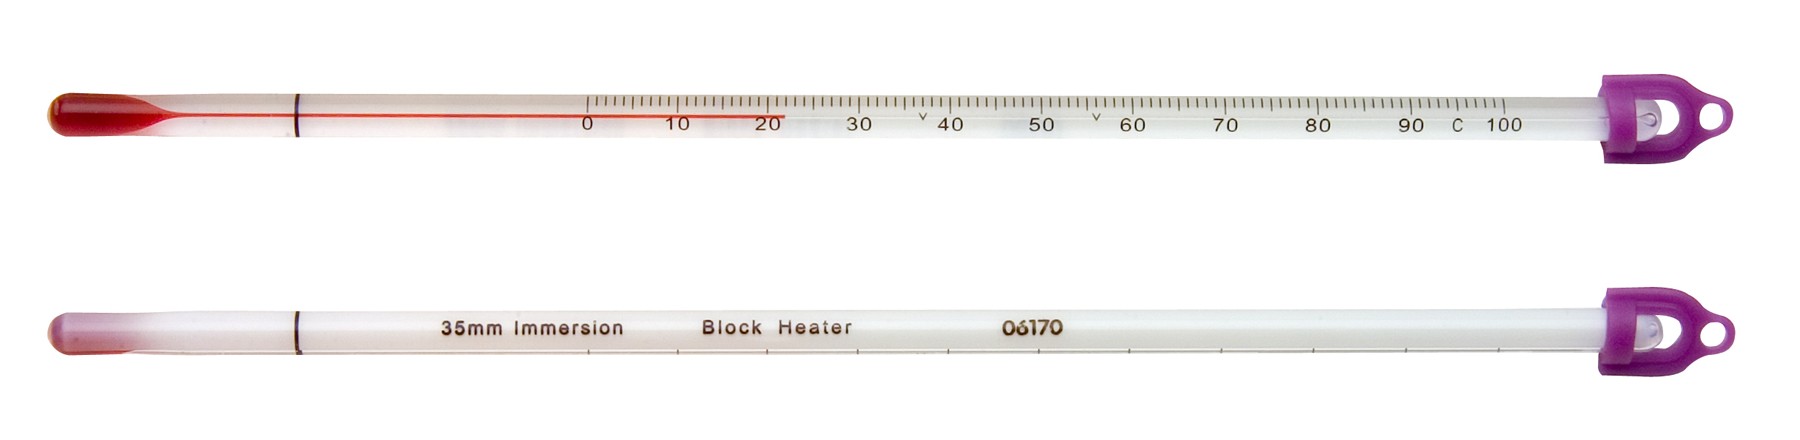 SP Bel-Art, H-B DURAC Dry Block/Incubator Liquid-In-Glass Thermometer; 20 to 100C, 76mm Immersion, Organic Liquid Fill